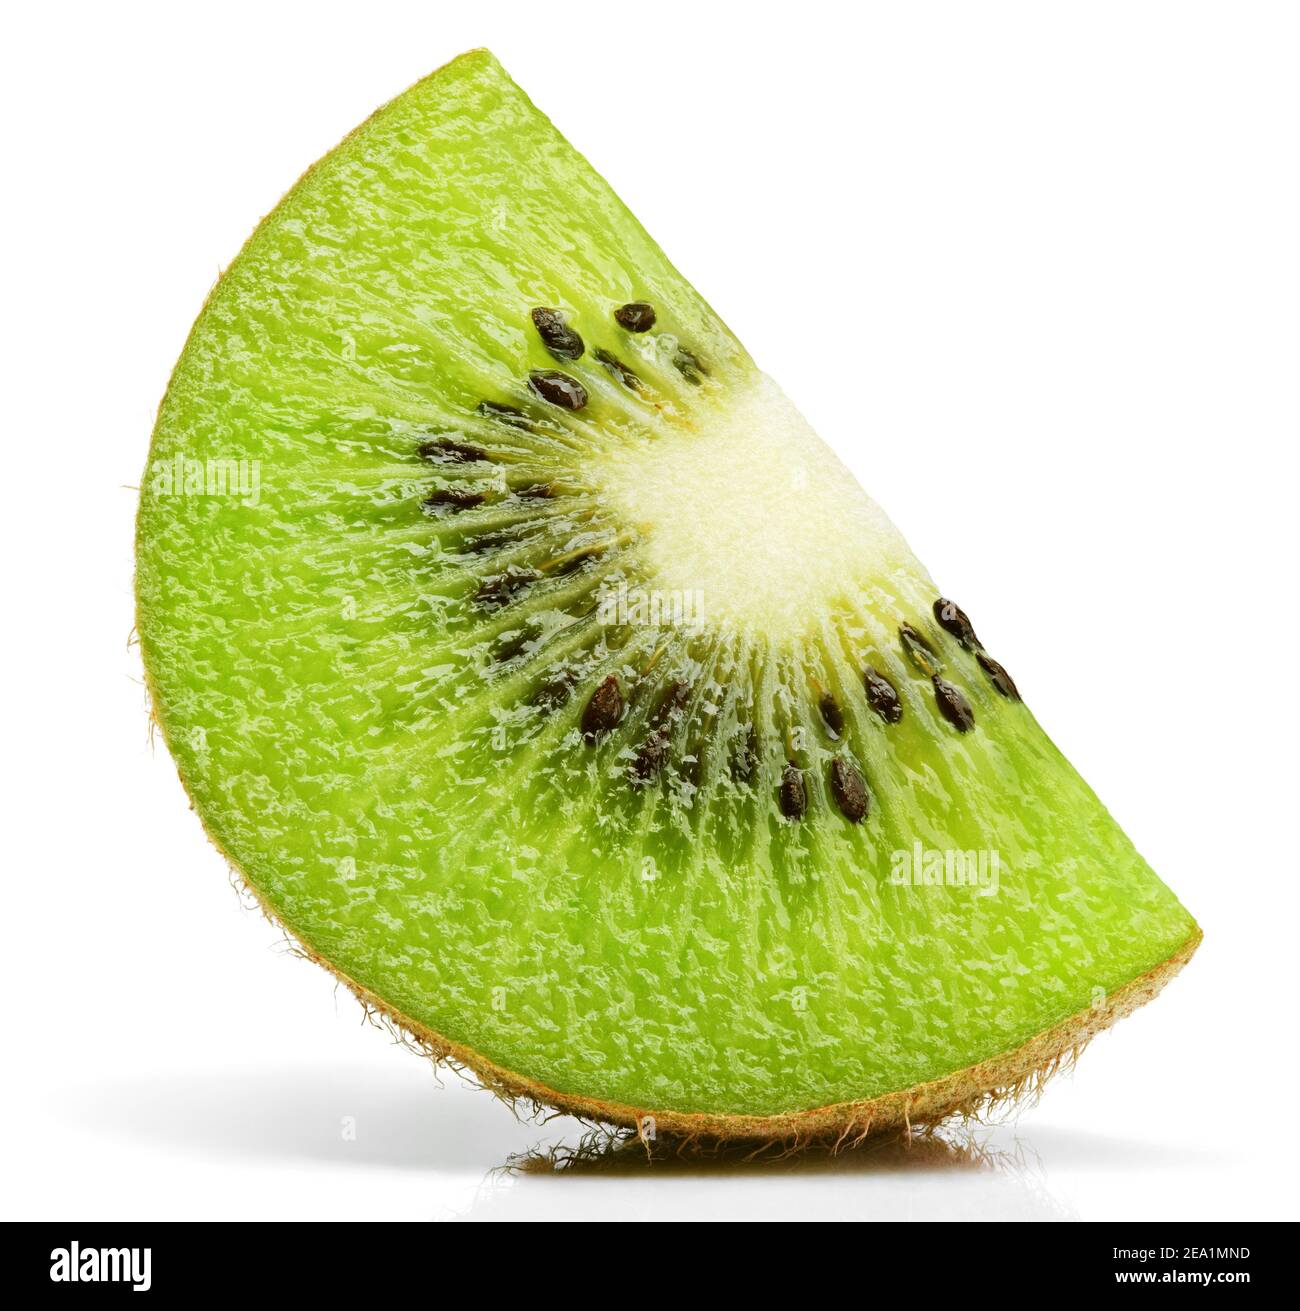 Ripe slice of kiwi fruit stand isolated on white background with shadow Stock Photo